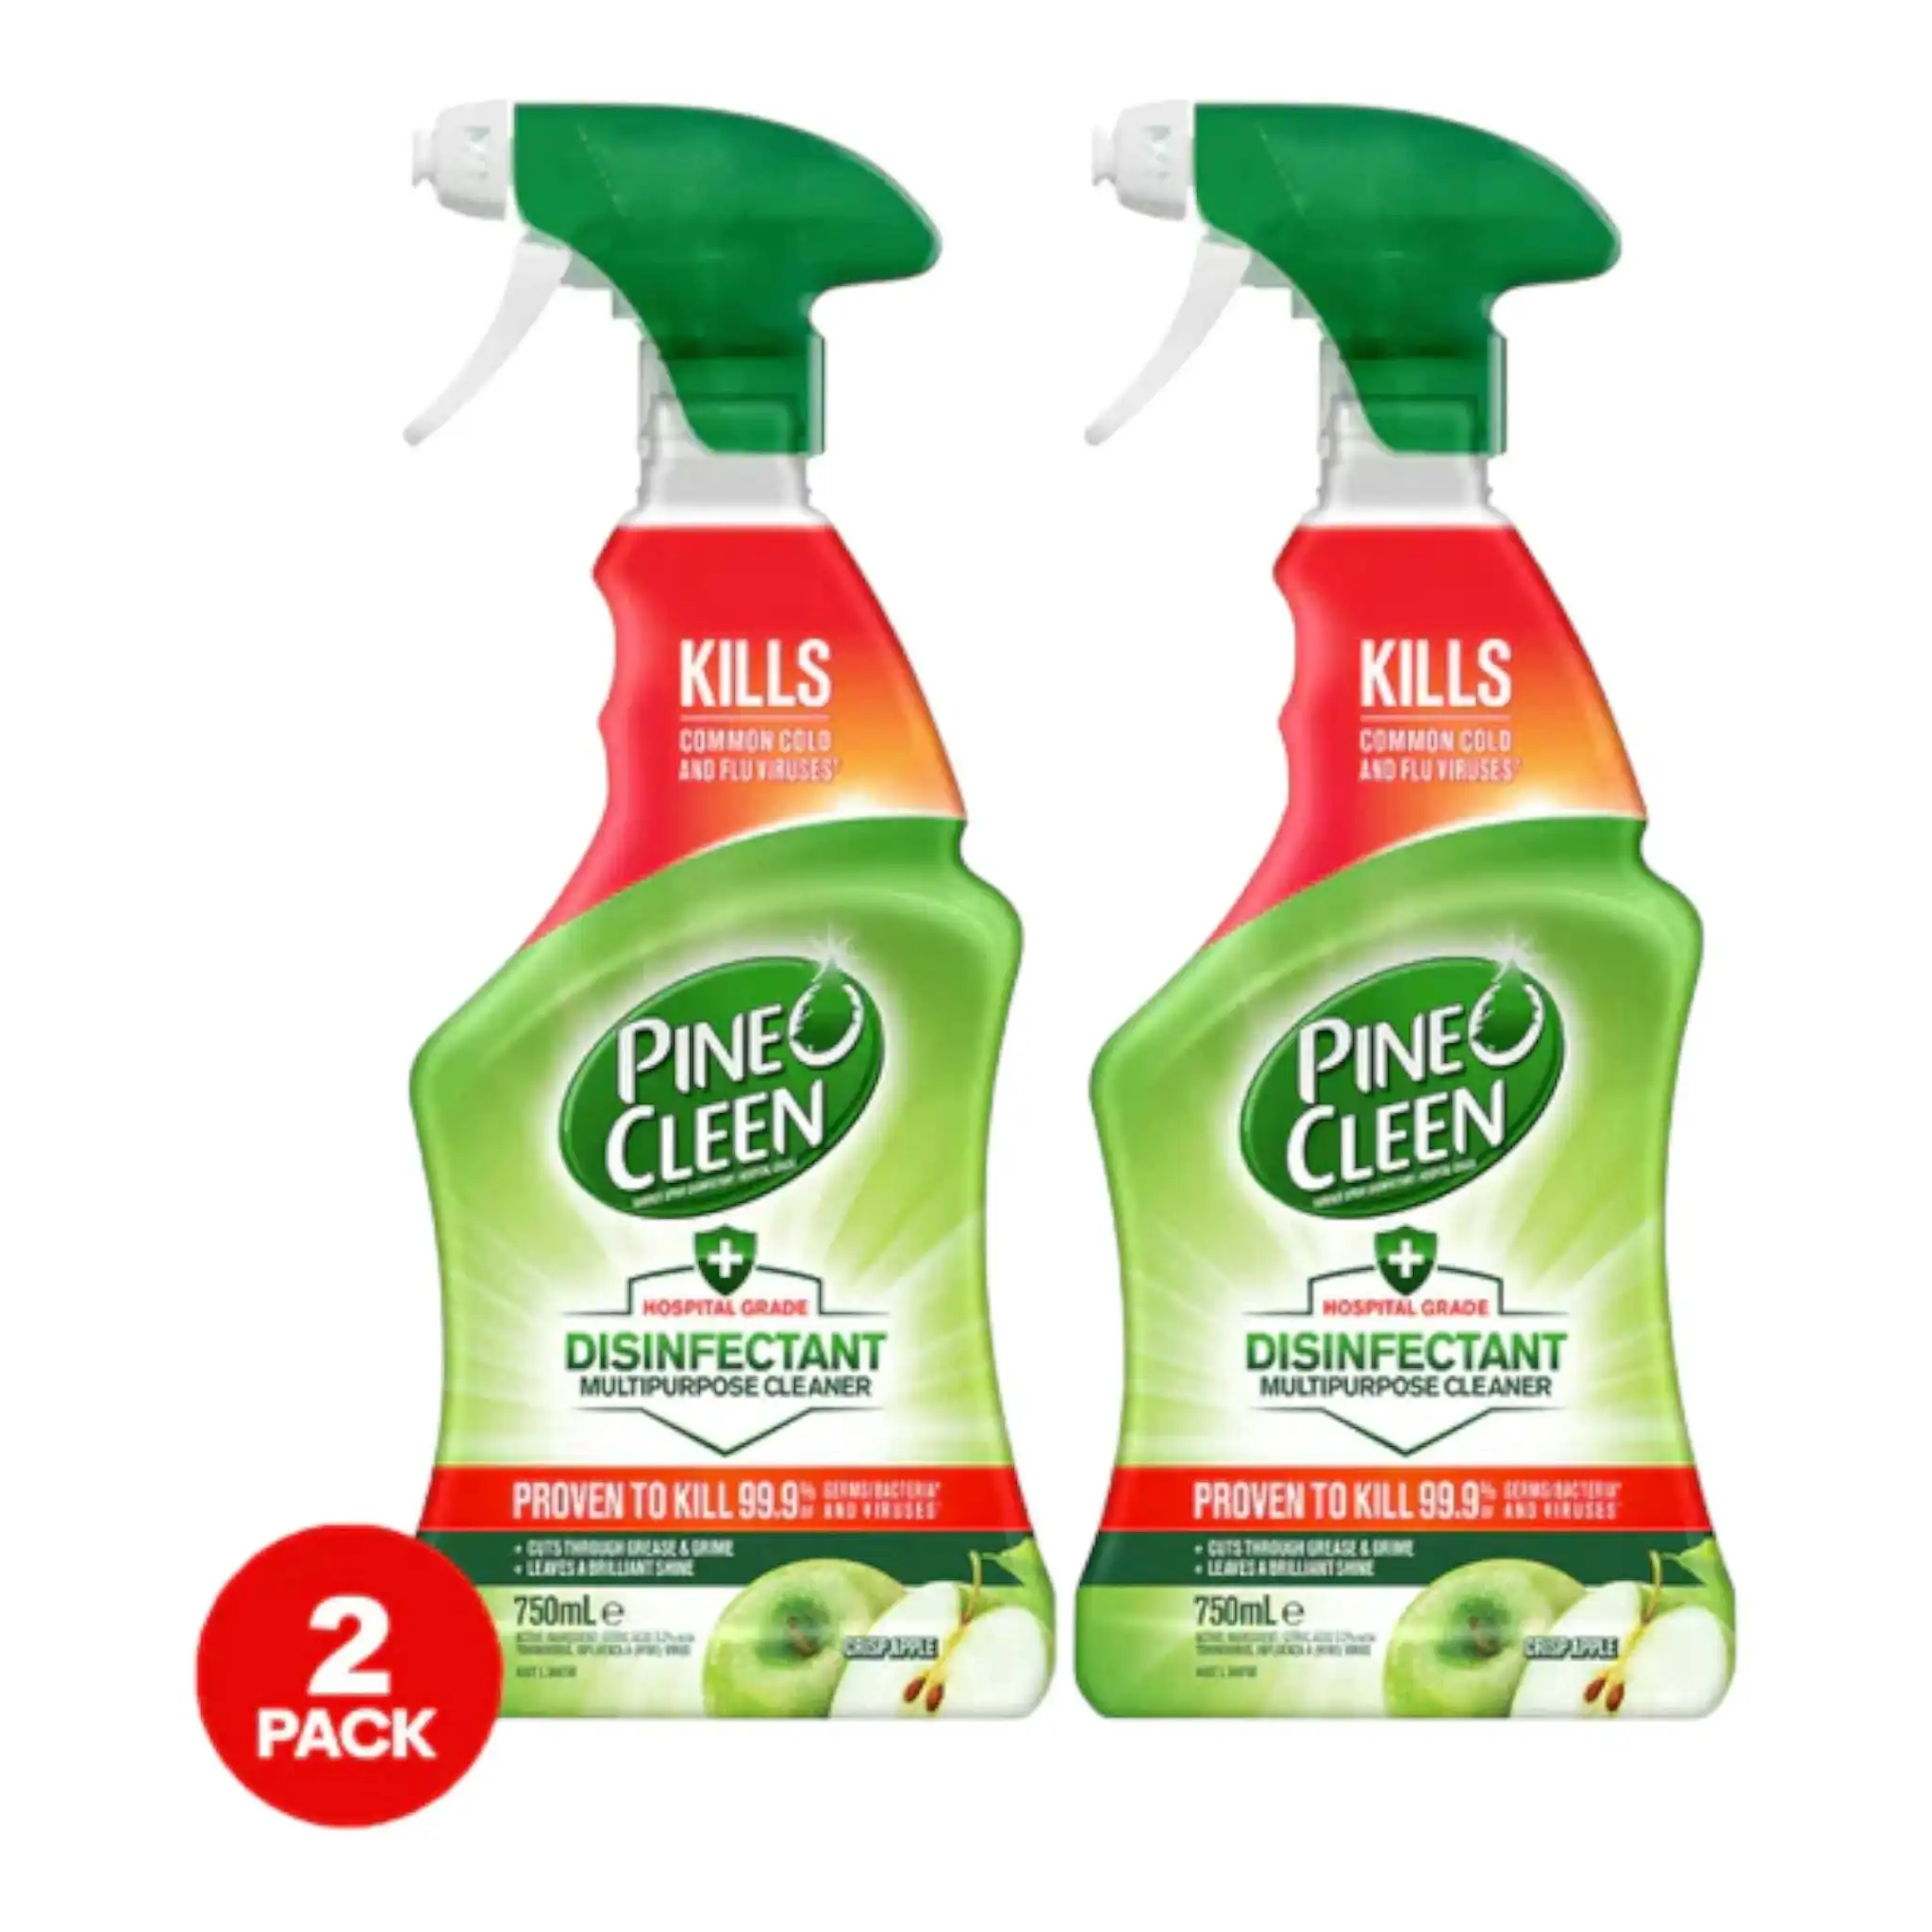 2 x Pine O Cleen Disinfectant Multi-Purpose Kitchen Spray Crisp Apple 750ml